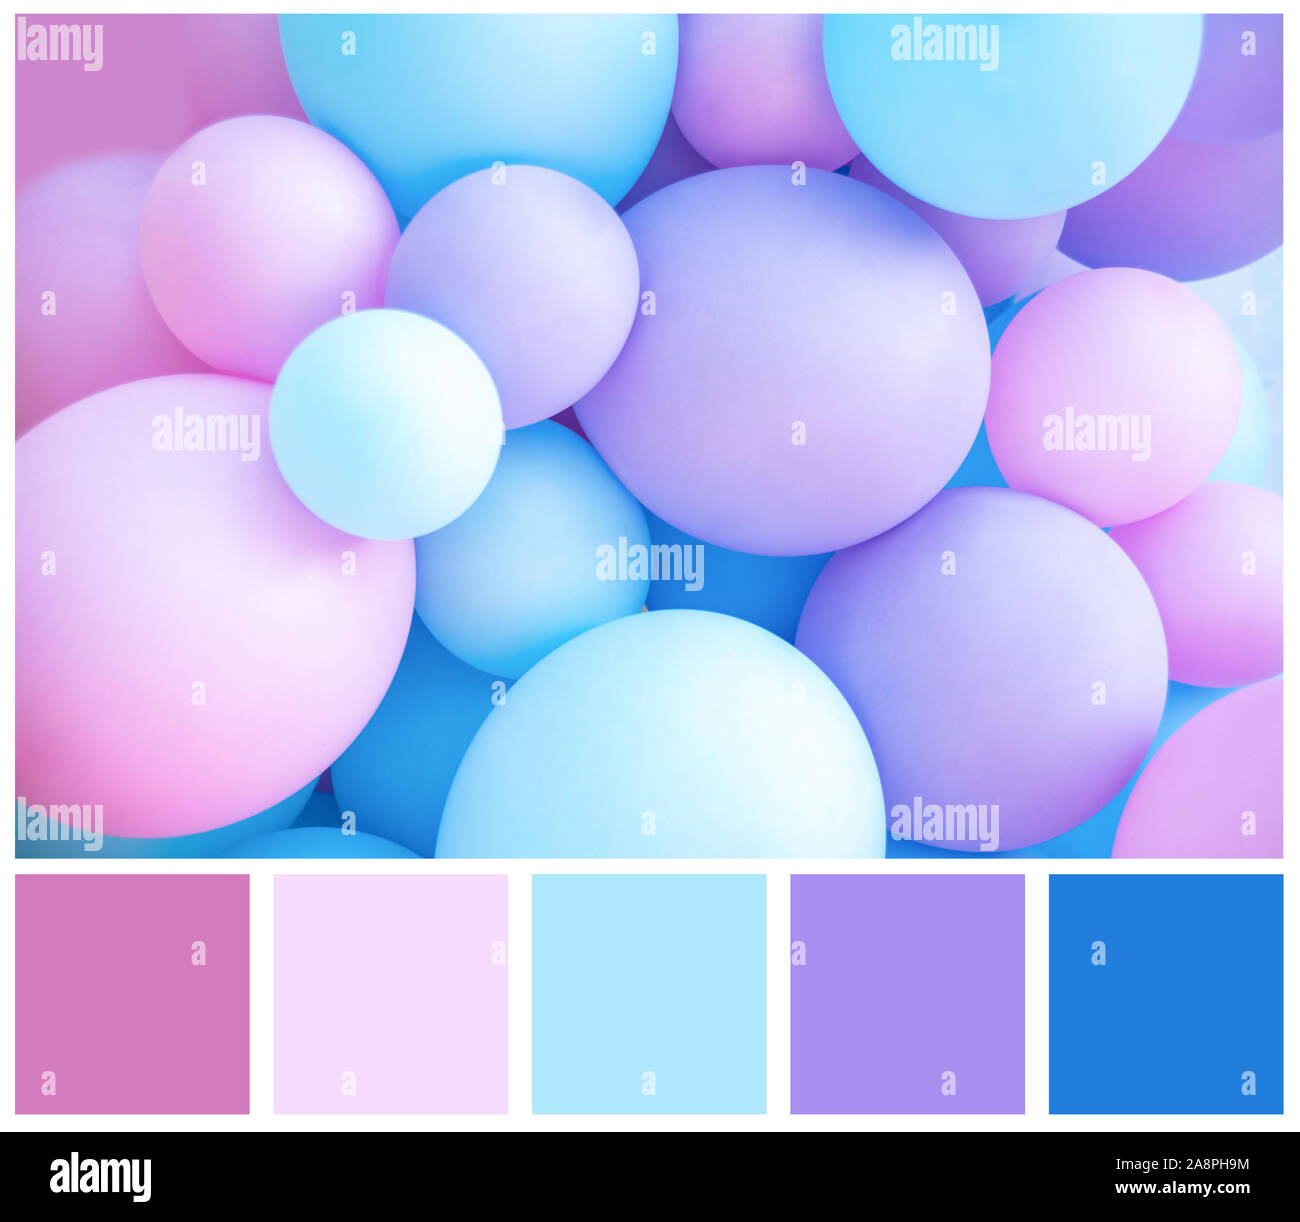 Color matching fotografías e imágenes de alta resolución - Alamy